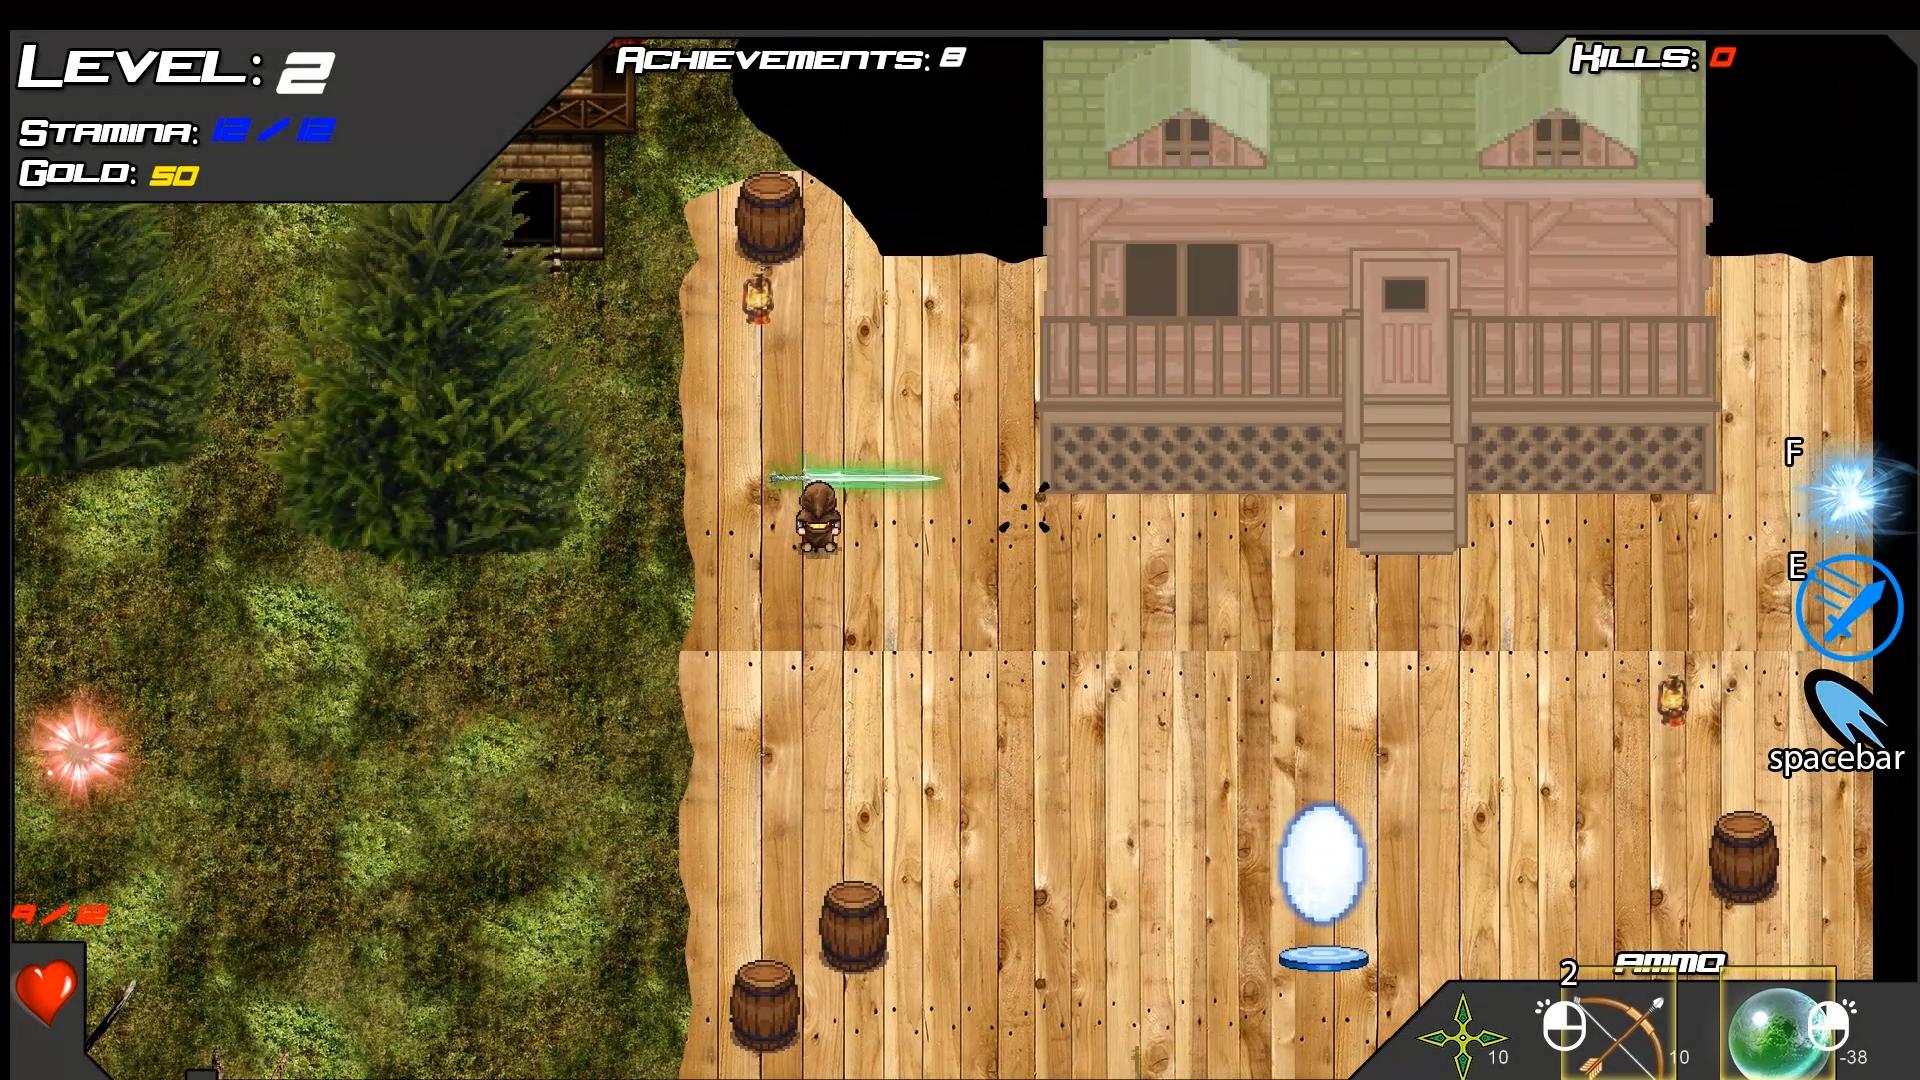 The Quest for Achievements II screenshot